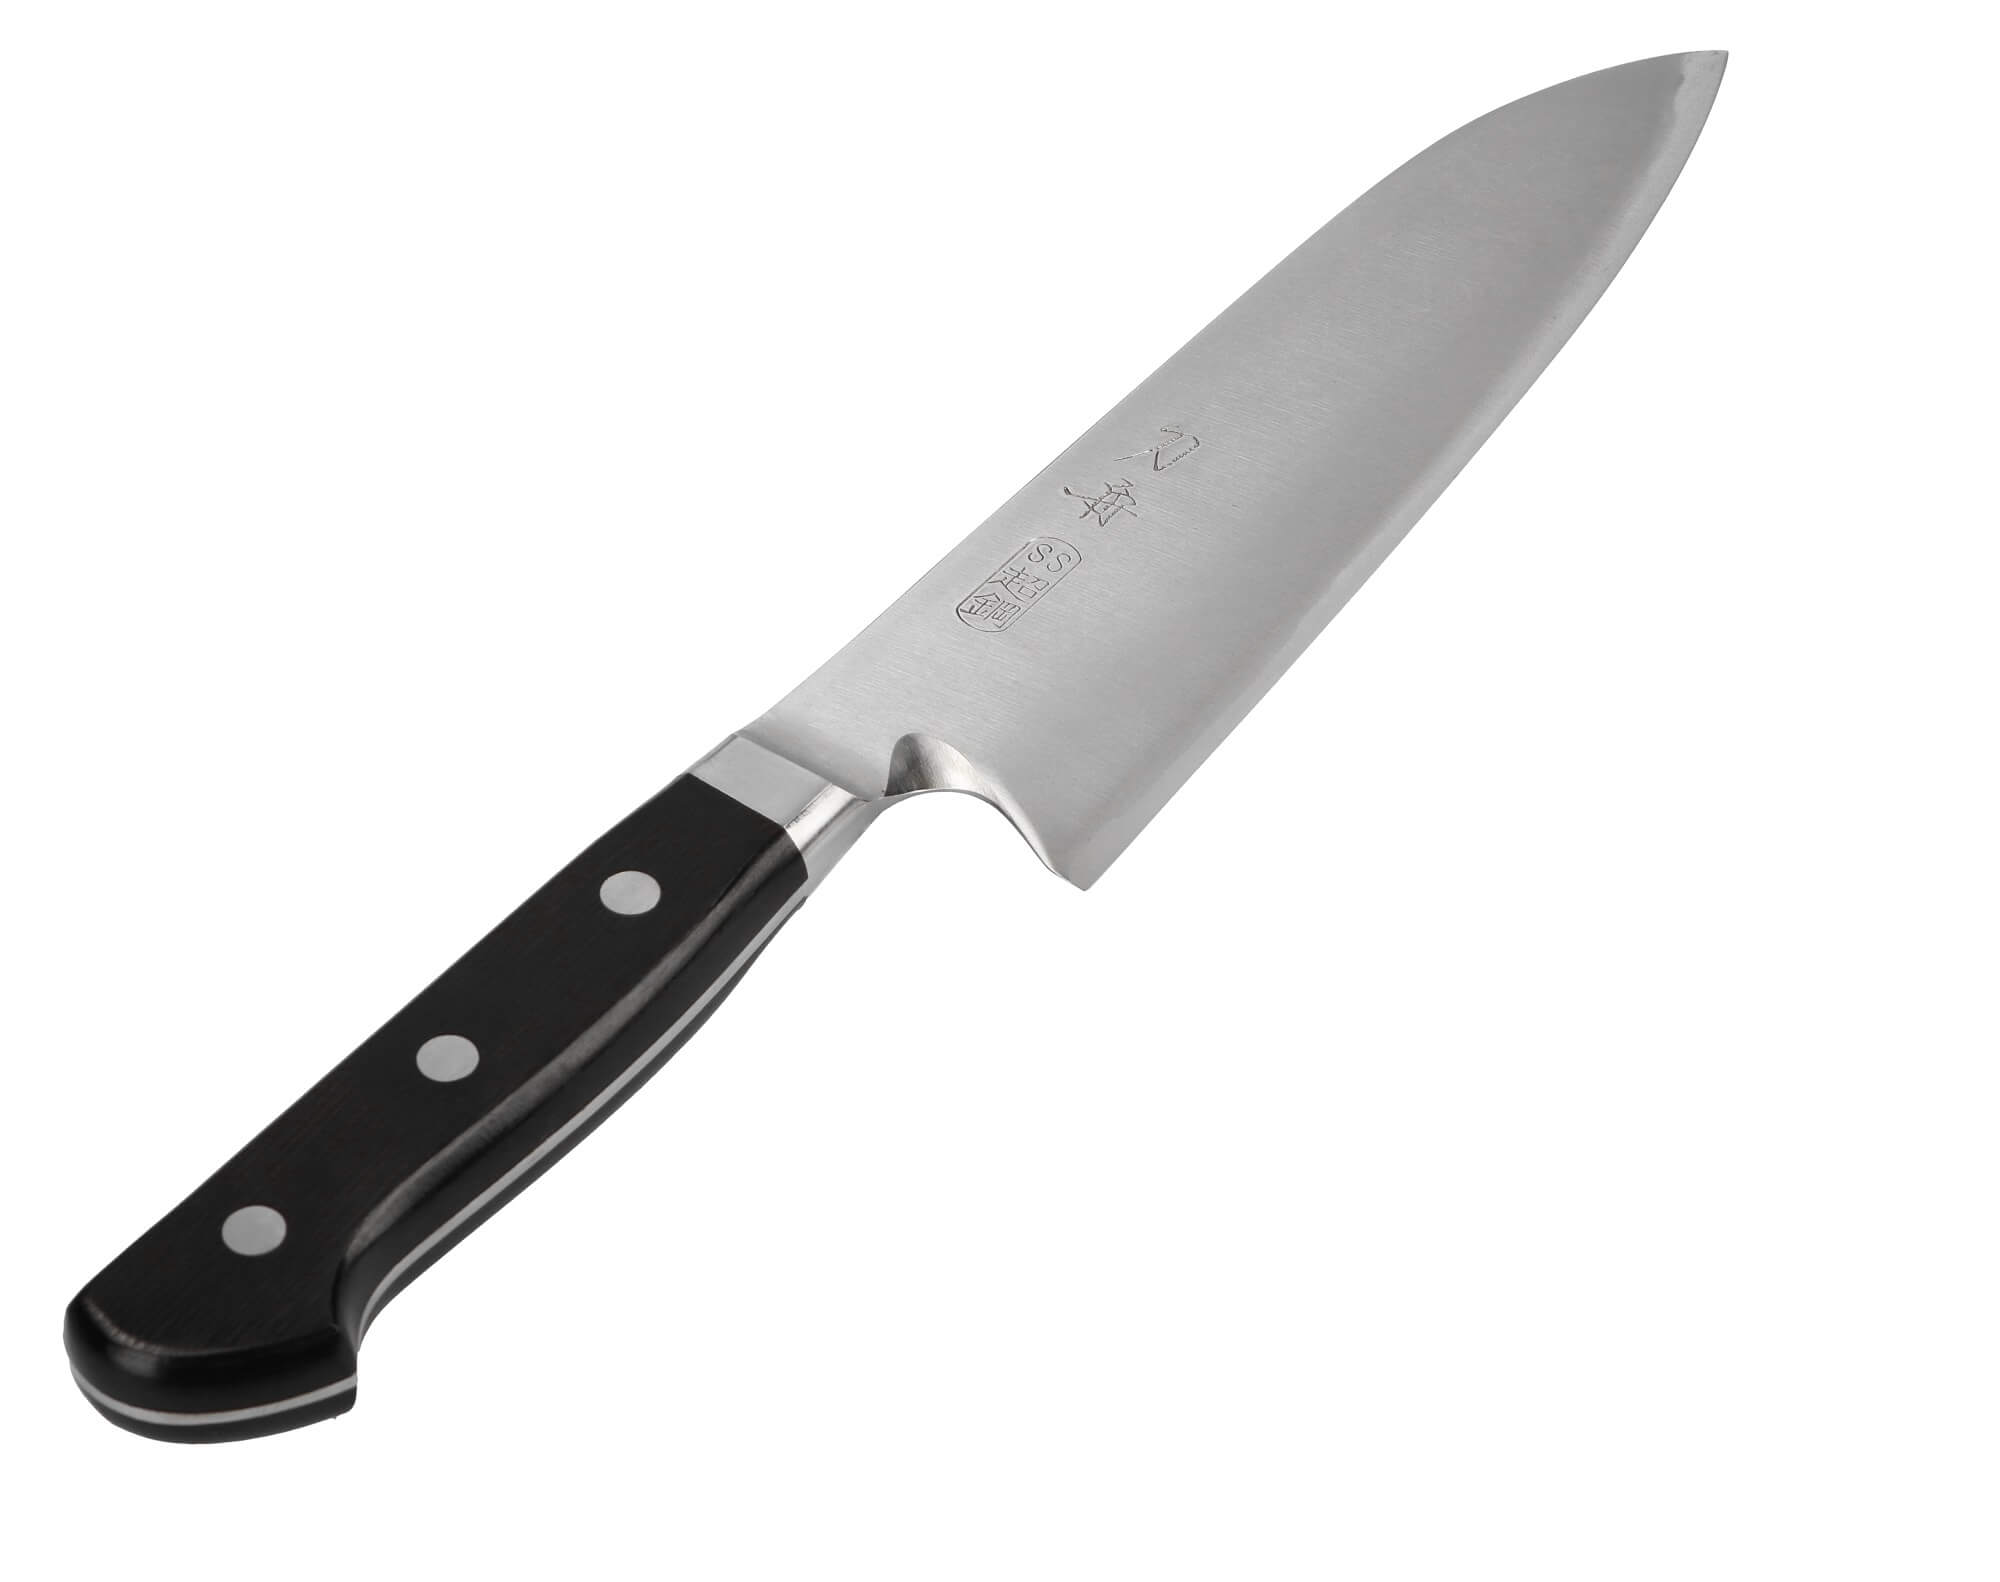 Highest quality Japanese chef knives and kitchen knives, 180mm Santoku knife